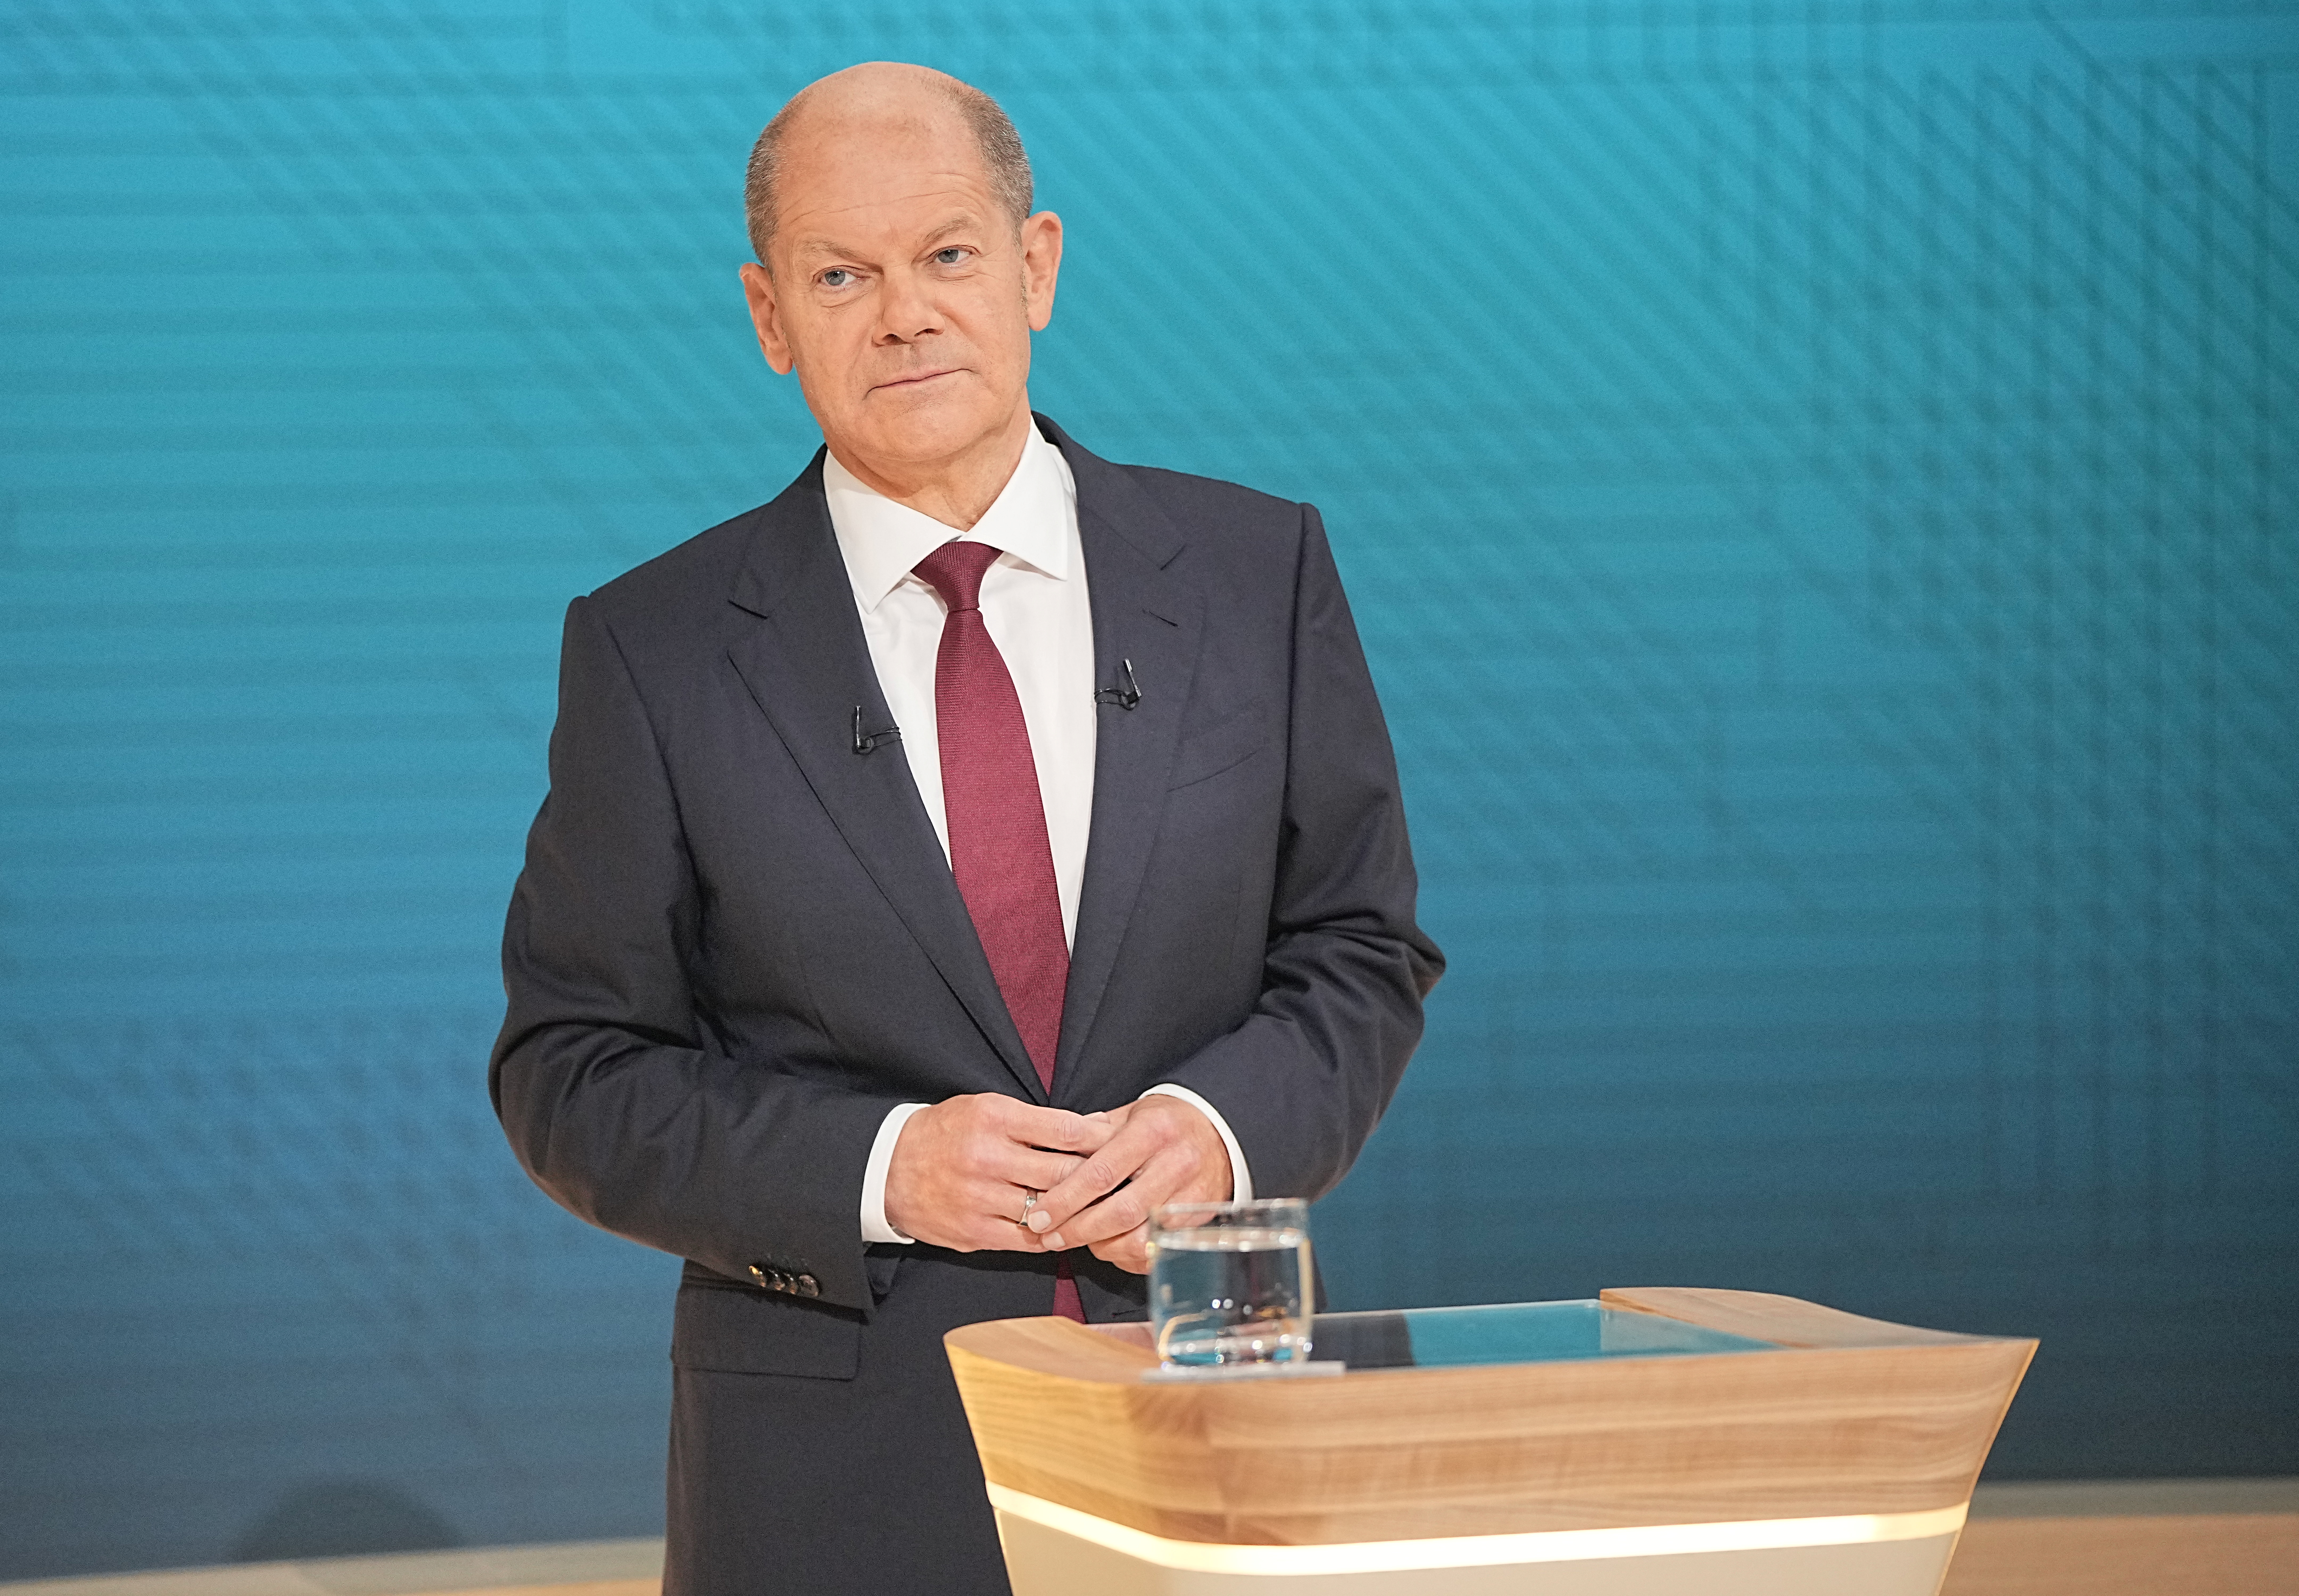 Televised debate of the candidates to succeed Germany's Merkel